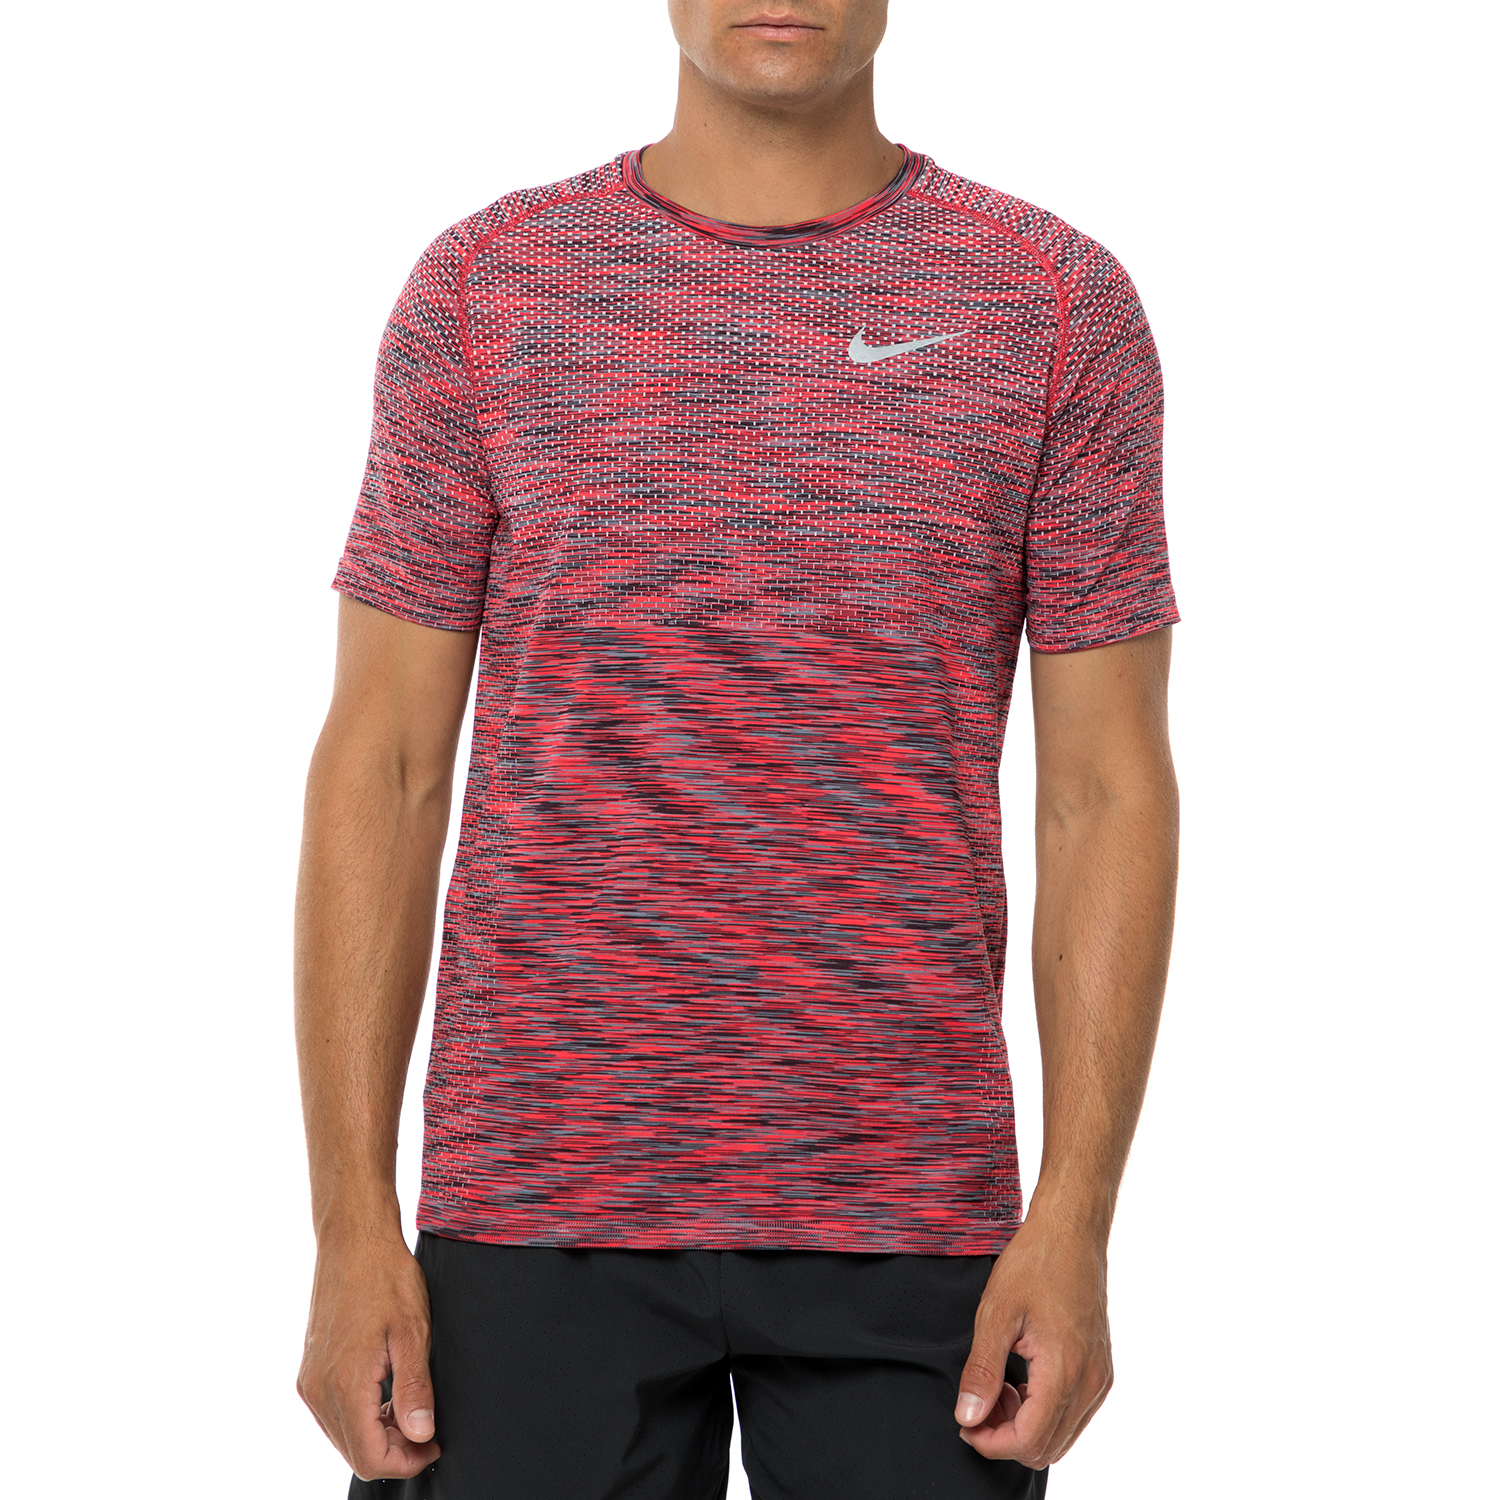 NIKE Ανδρική αθλητική κοντομάνικη μπλούζα Nike DF KNIT κόκκινη-μαύρη